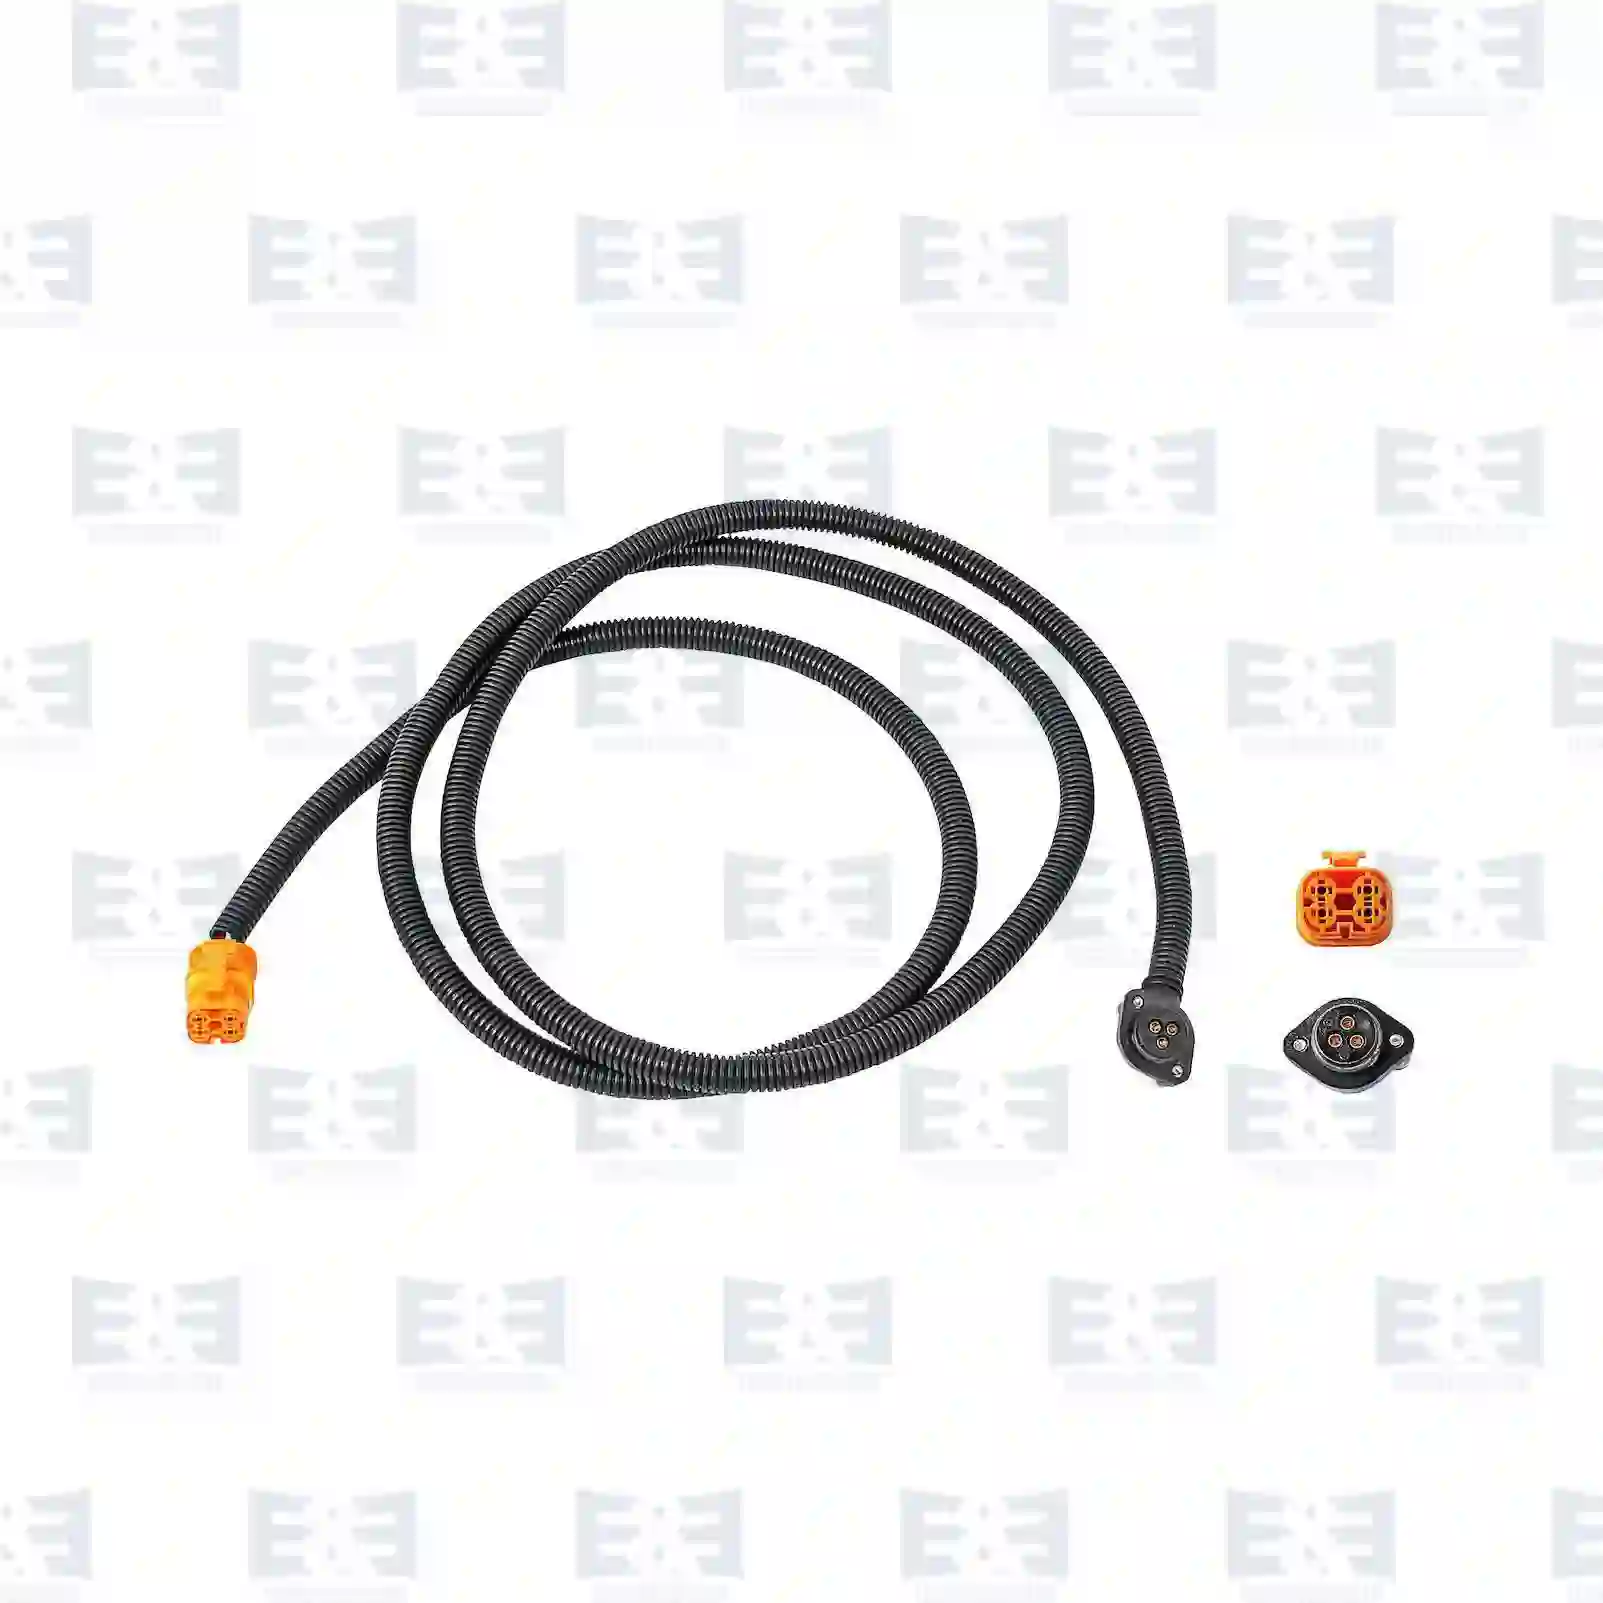 Mirror Cable harness, orange, EE No 2E2292009 ,  oem no:81254296894, 8125 E&E Truck Spare Parts | Truck Spare Parts, Auotomotive Spare Parts